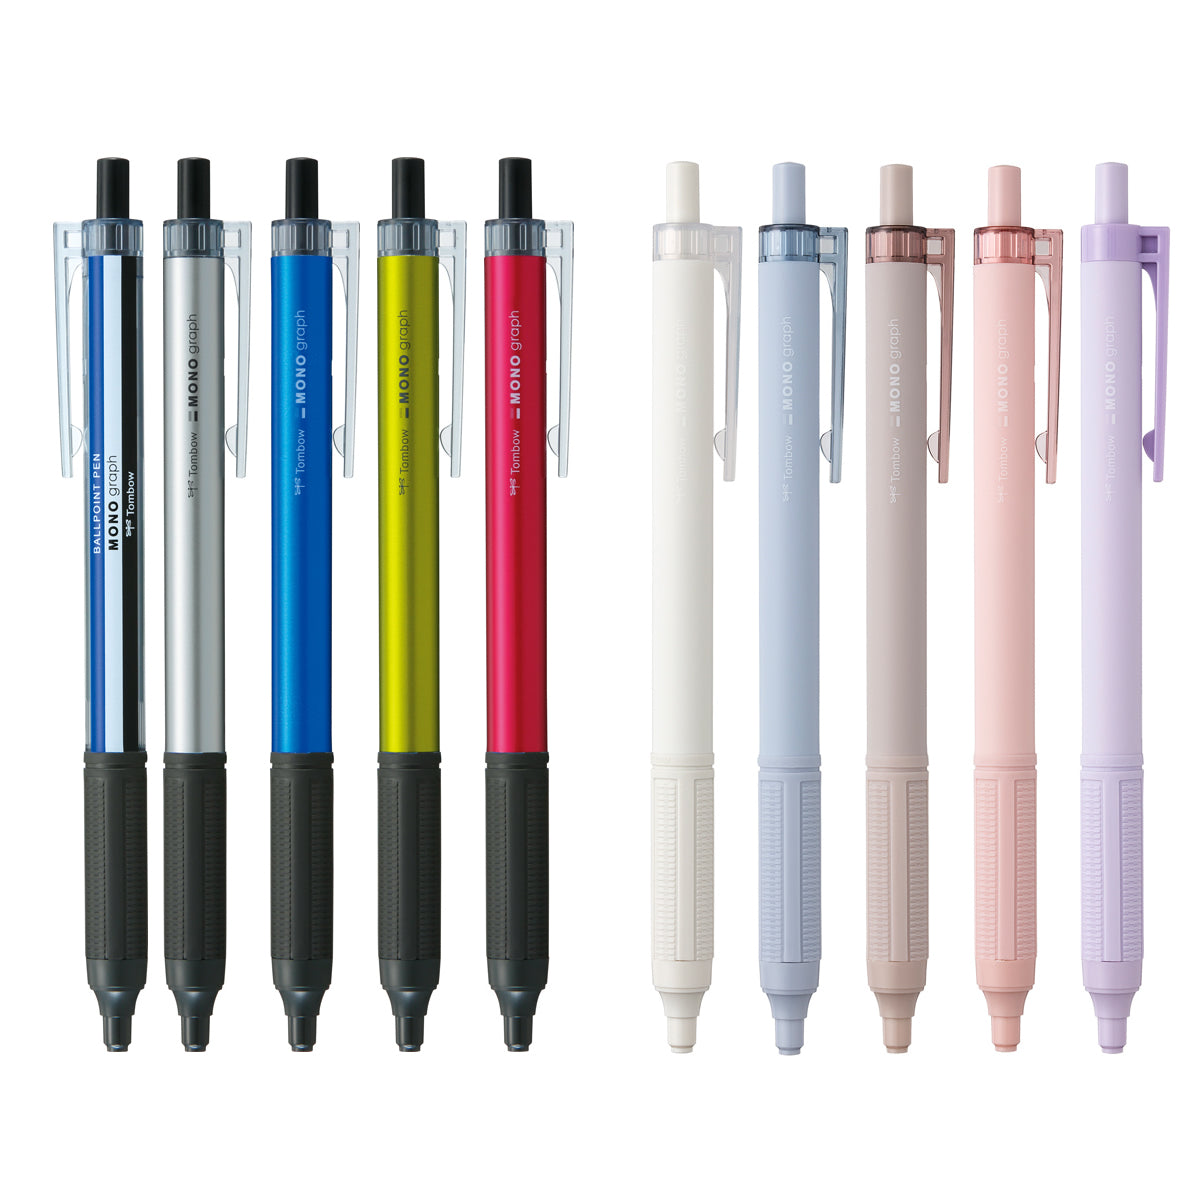 Tombow Mono Graph Lite 0.5mm Ballpoint Pens (Pack of 10)